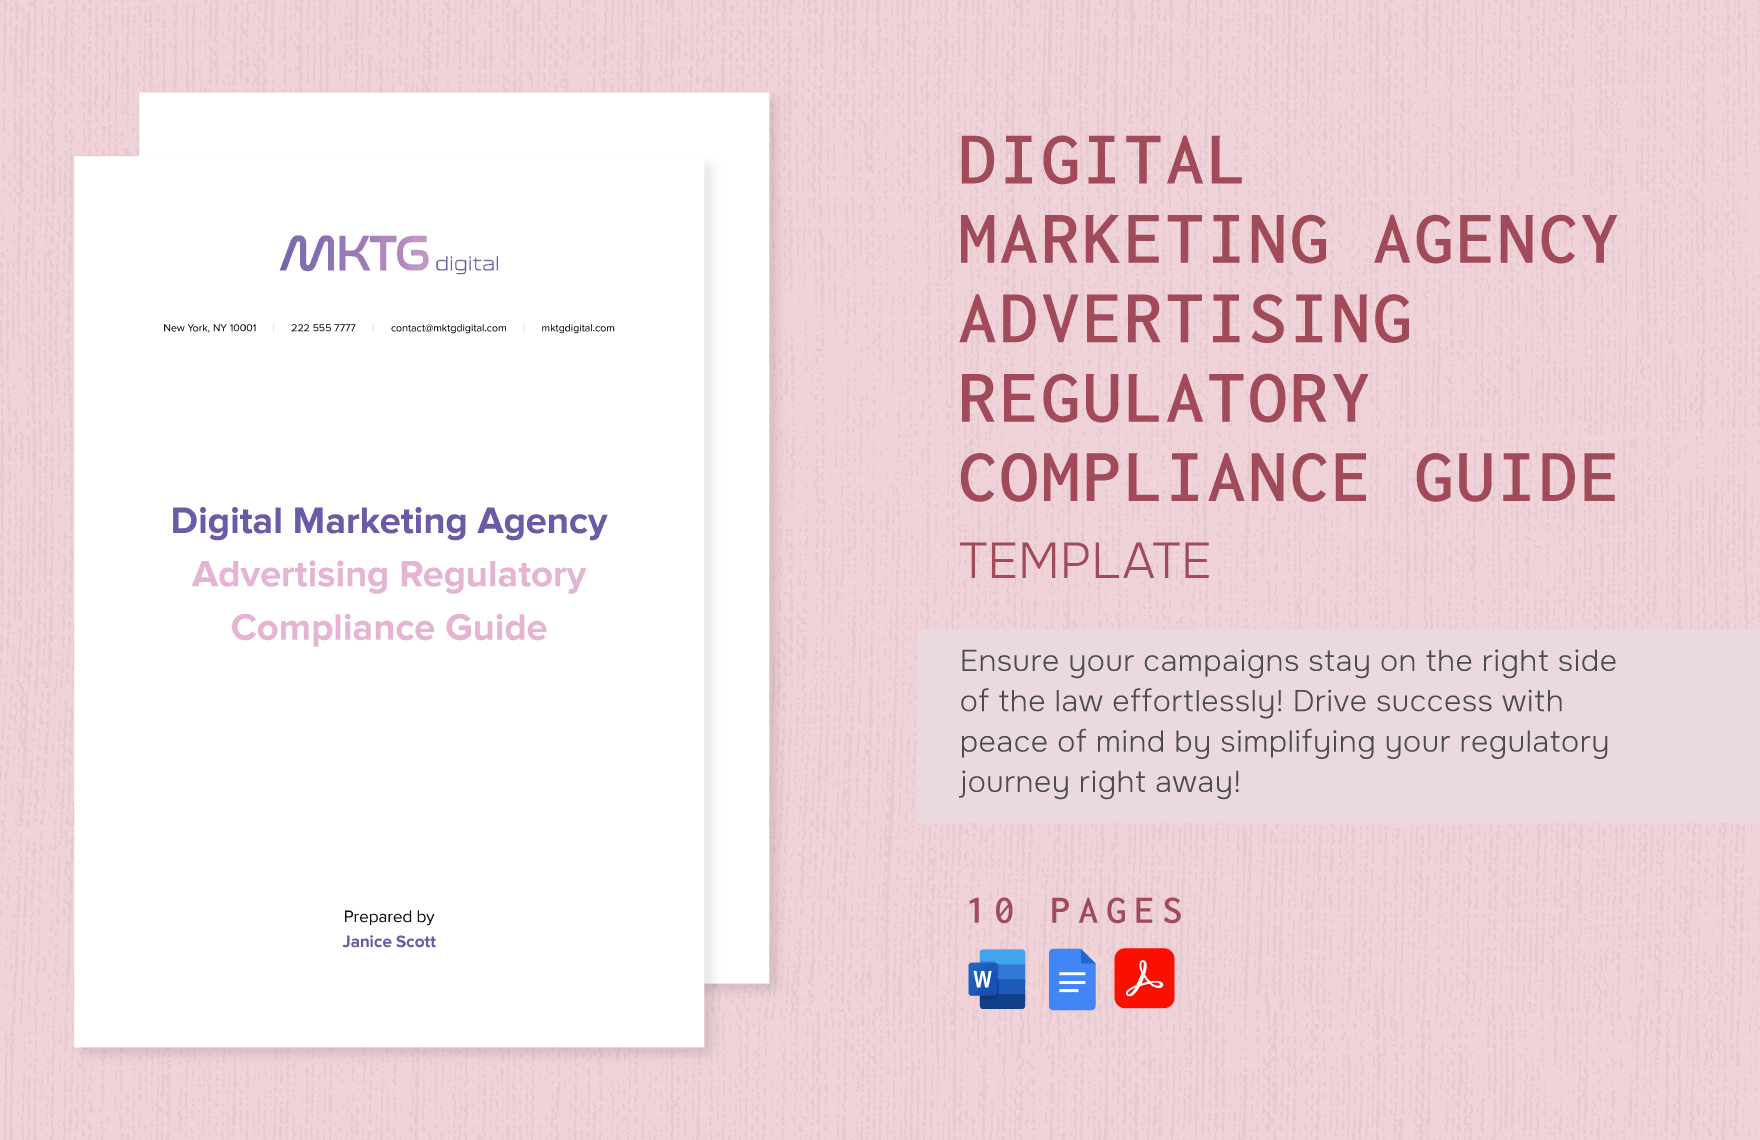 Digital Marketing Agency Advertising Regulatory Compliance Guide Template